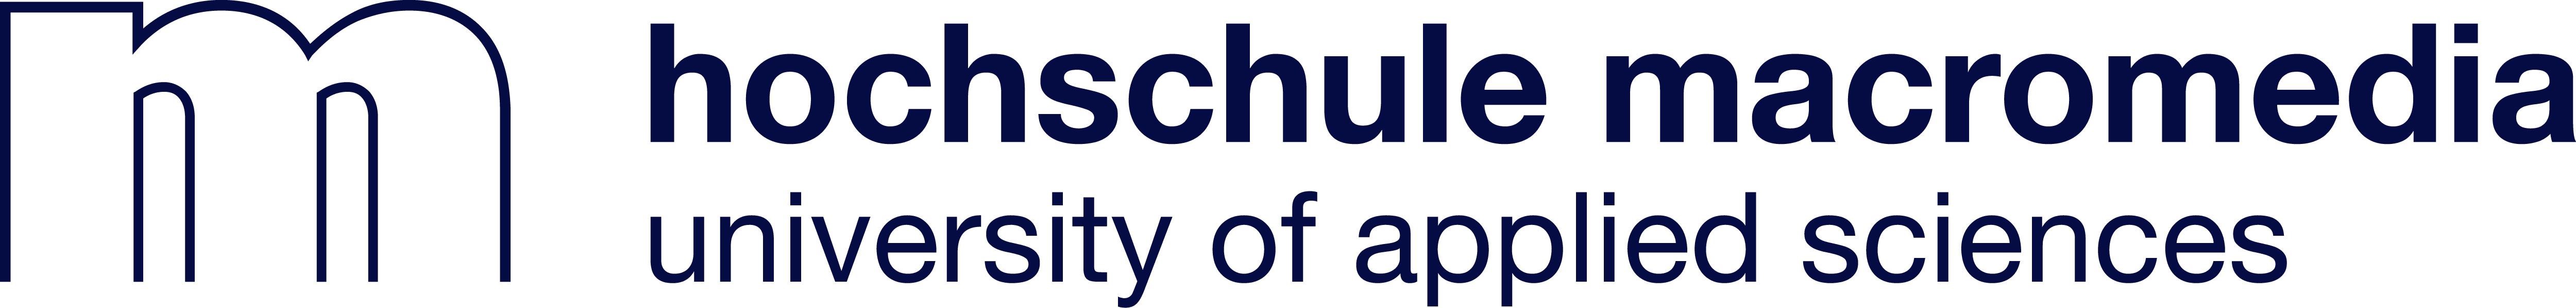 hochschule-macromedia-logo-rgb-blueberry